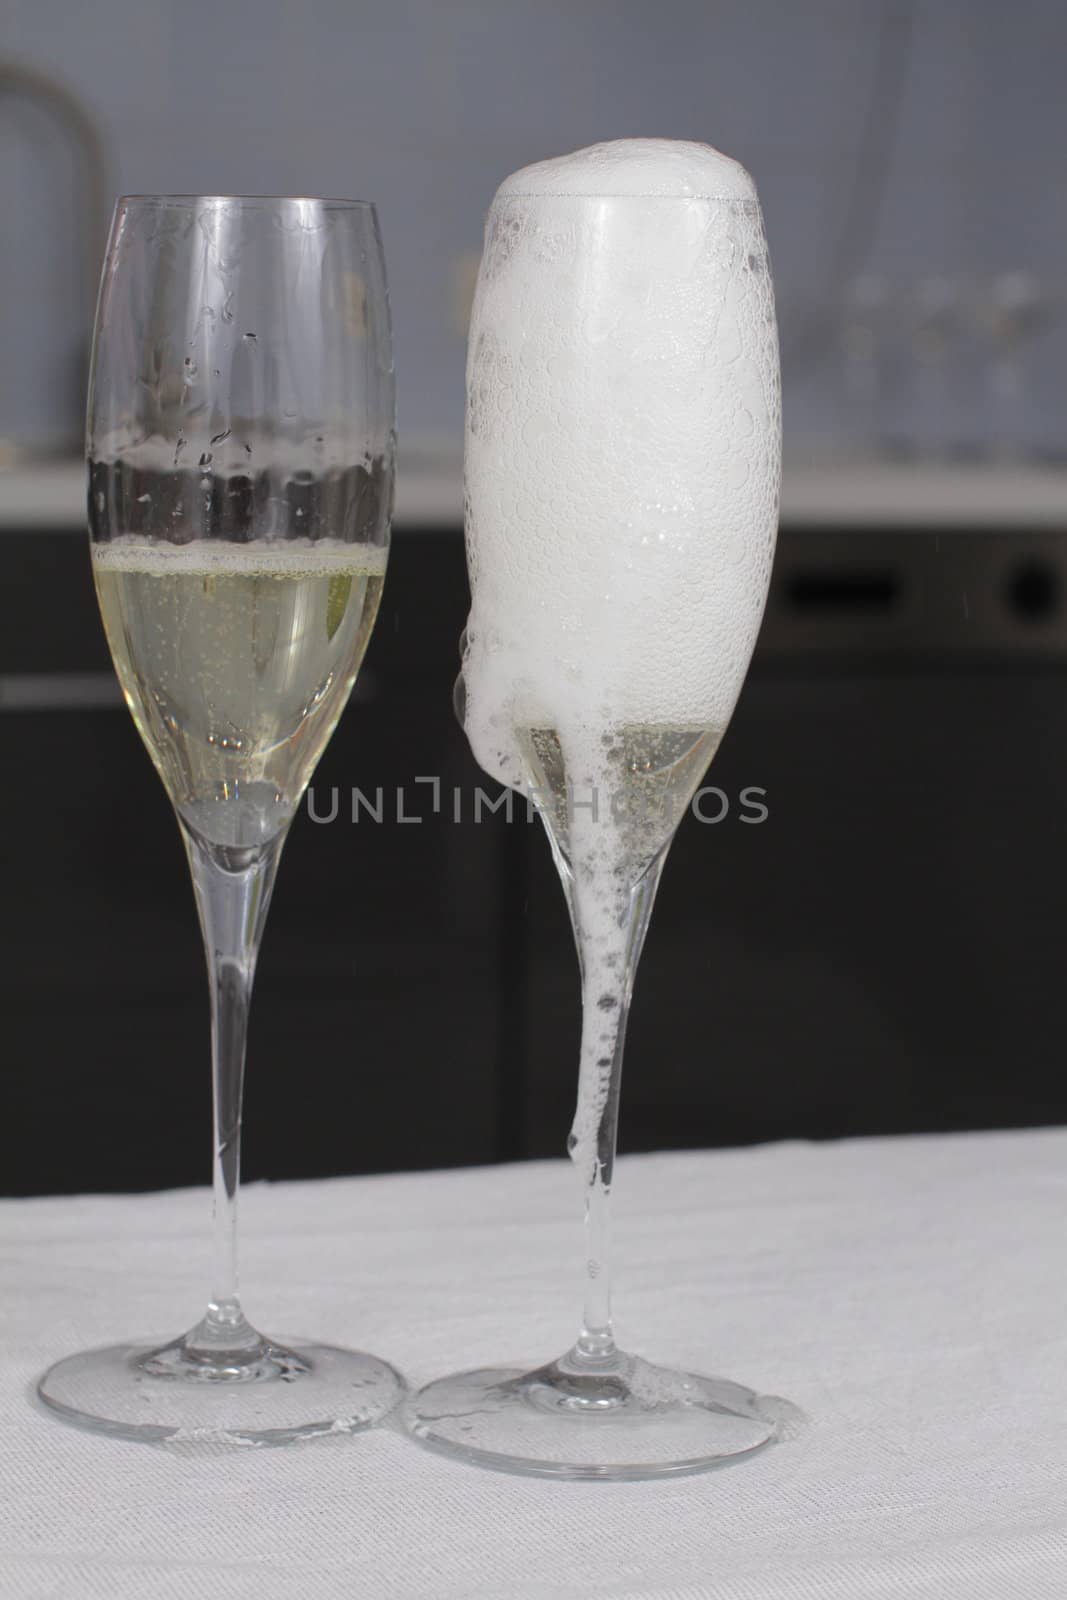 Champagne Bottle Ready For Celebration by yucas